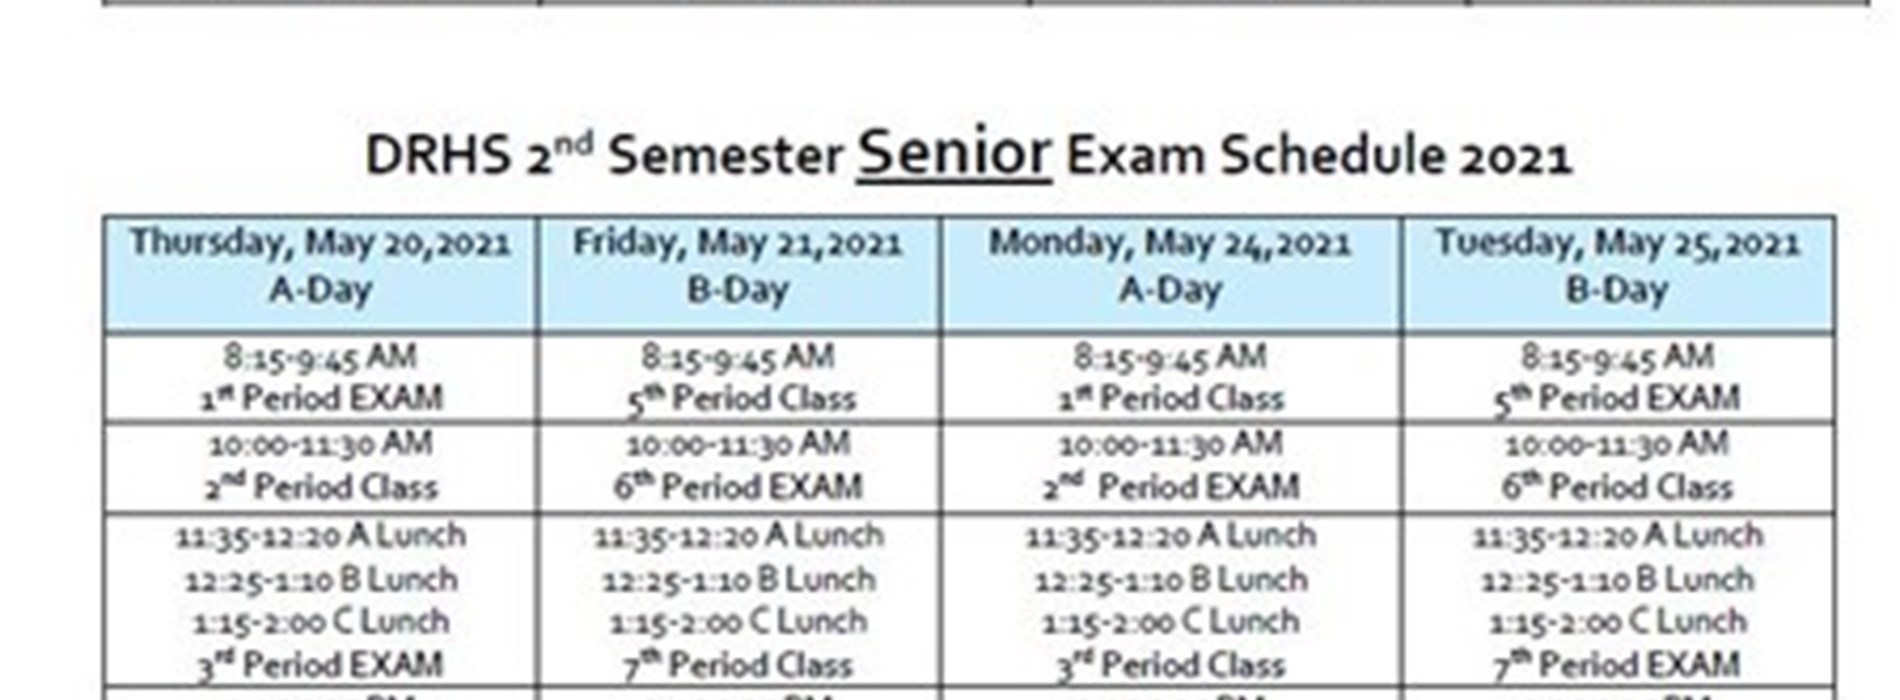 semester-2-exam-schedule-2021.jpg